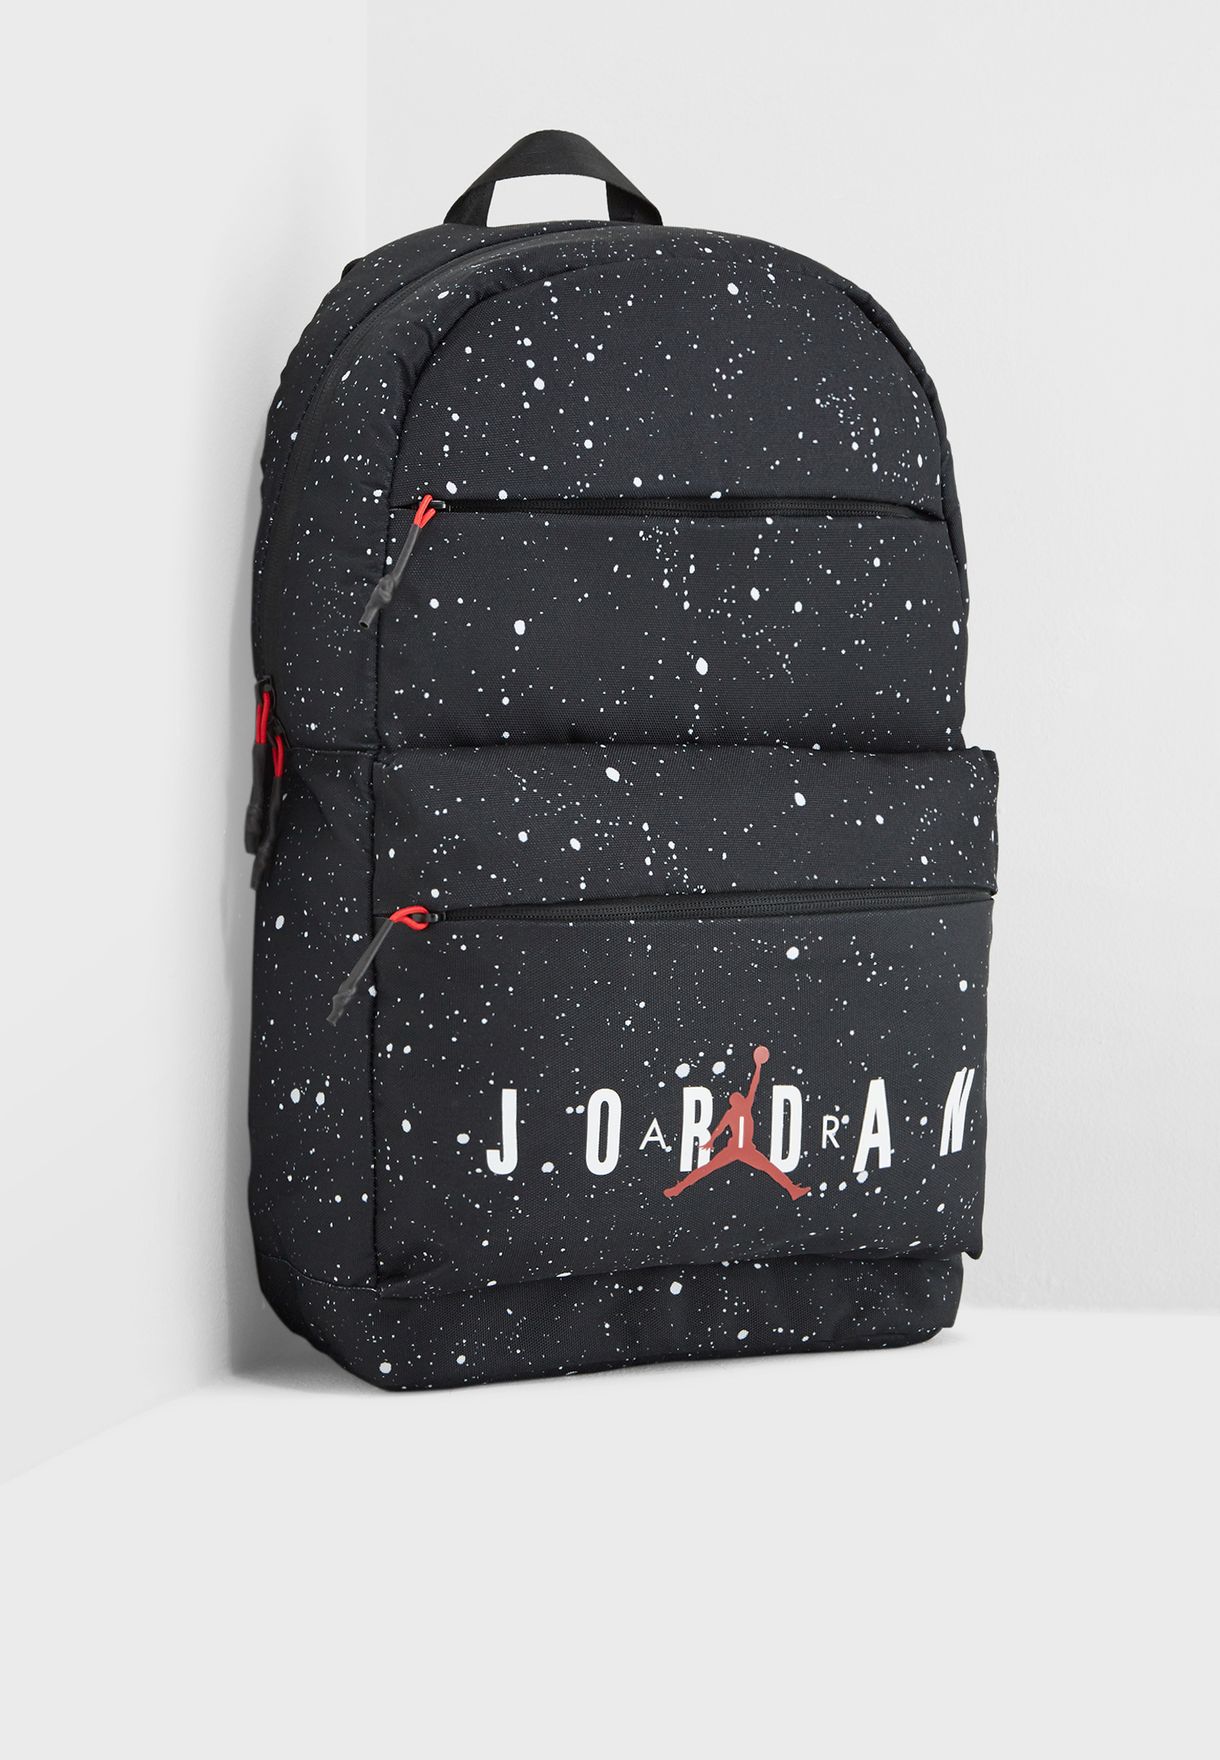 Buy Nike prints Air Jordan Backpack for 